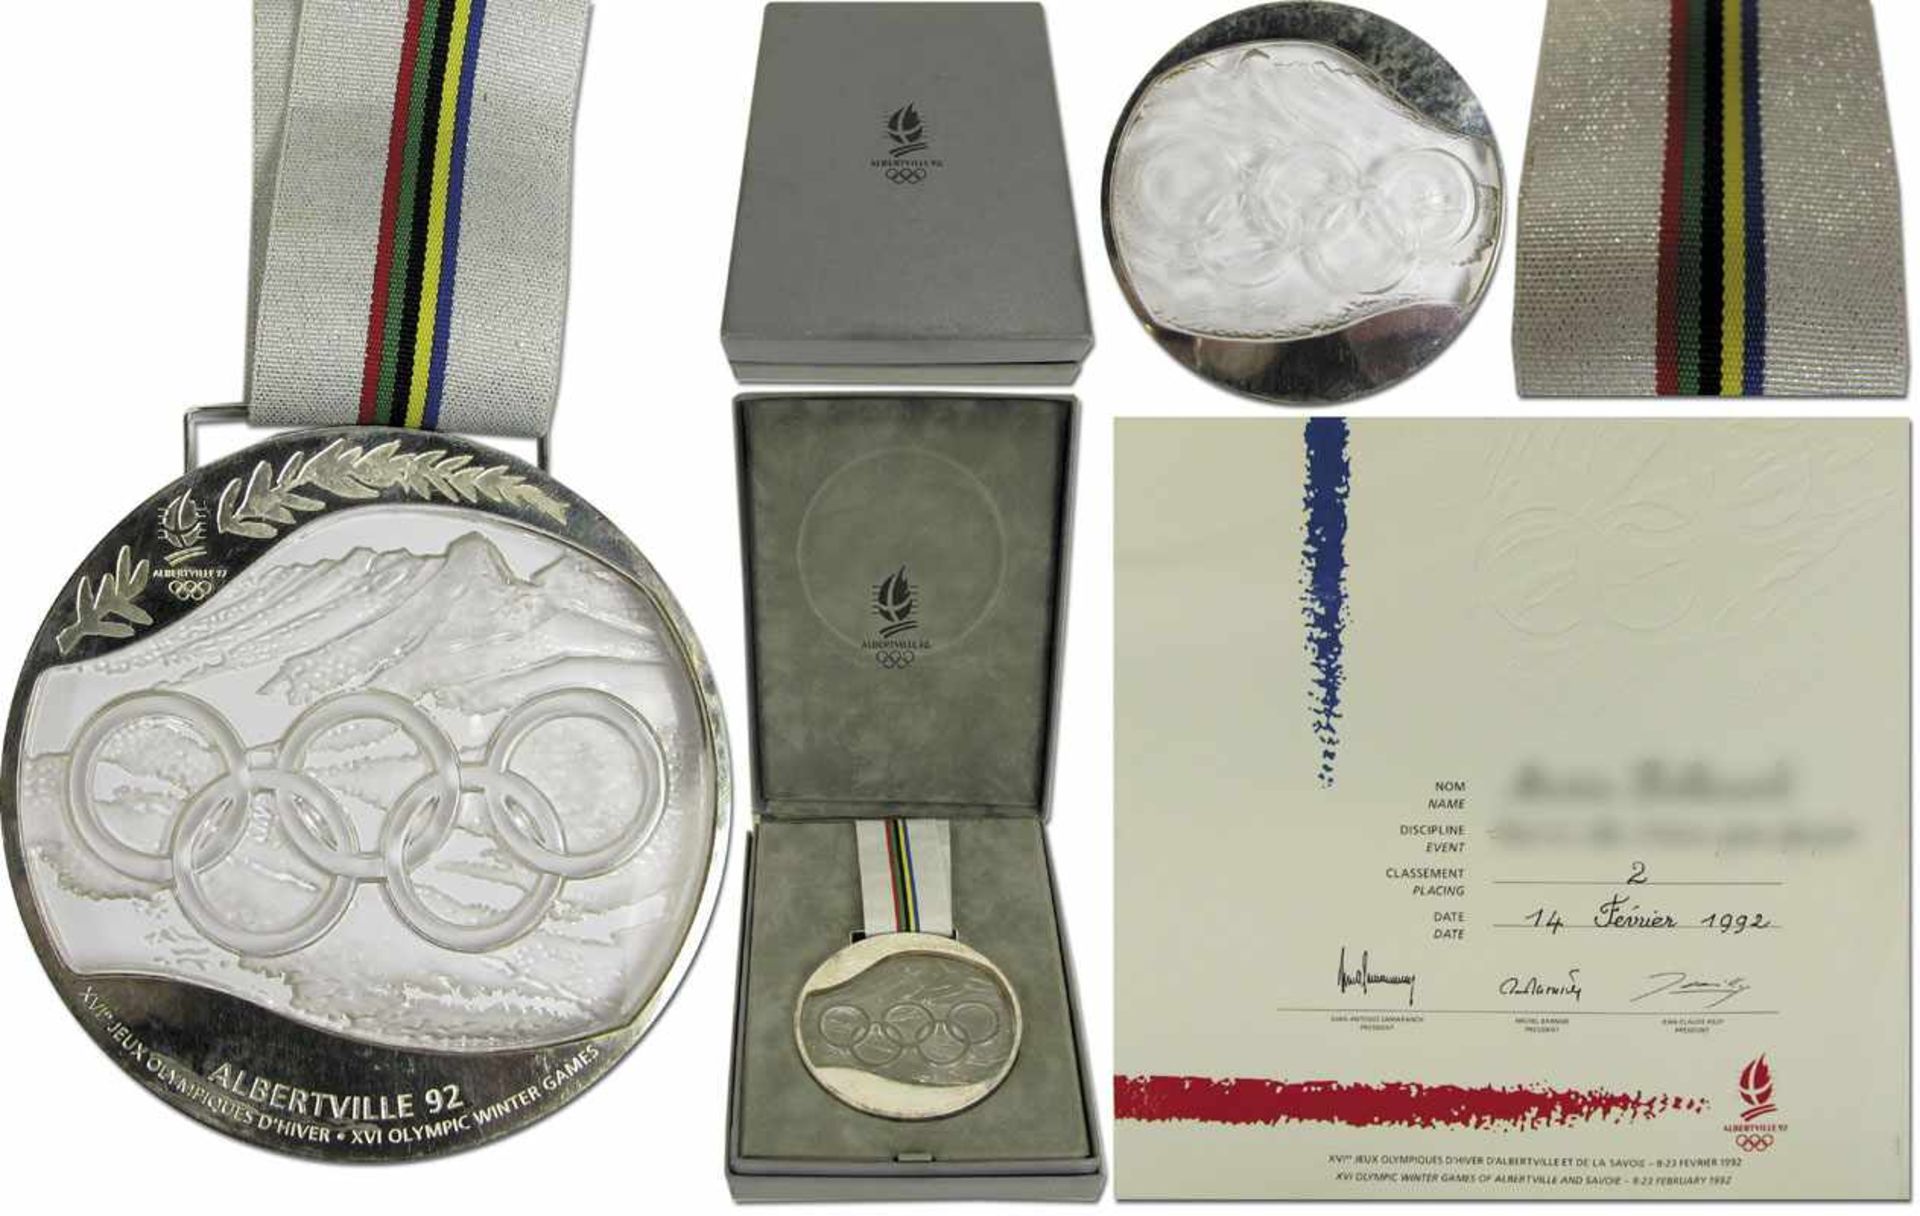 Olympic Winter Games 1992 Silver Winner medal - winner medal from the Olympic Games in Albertville